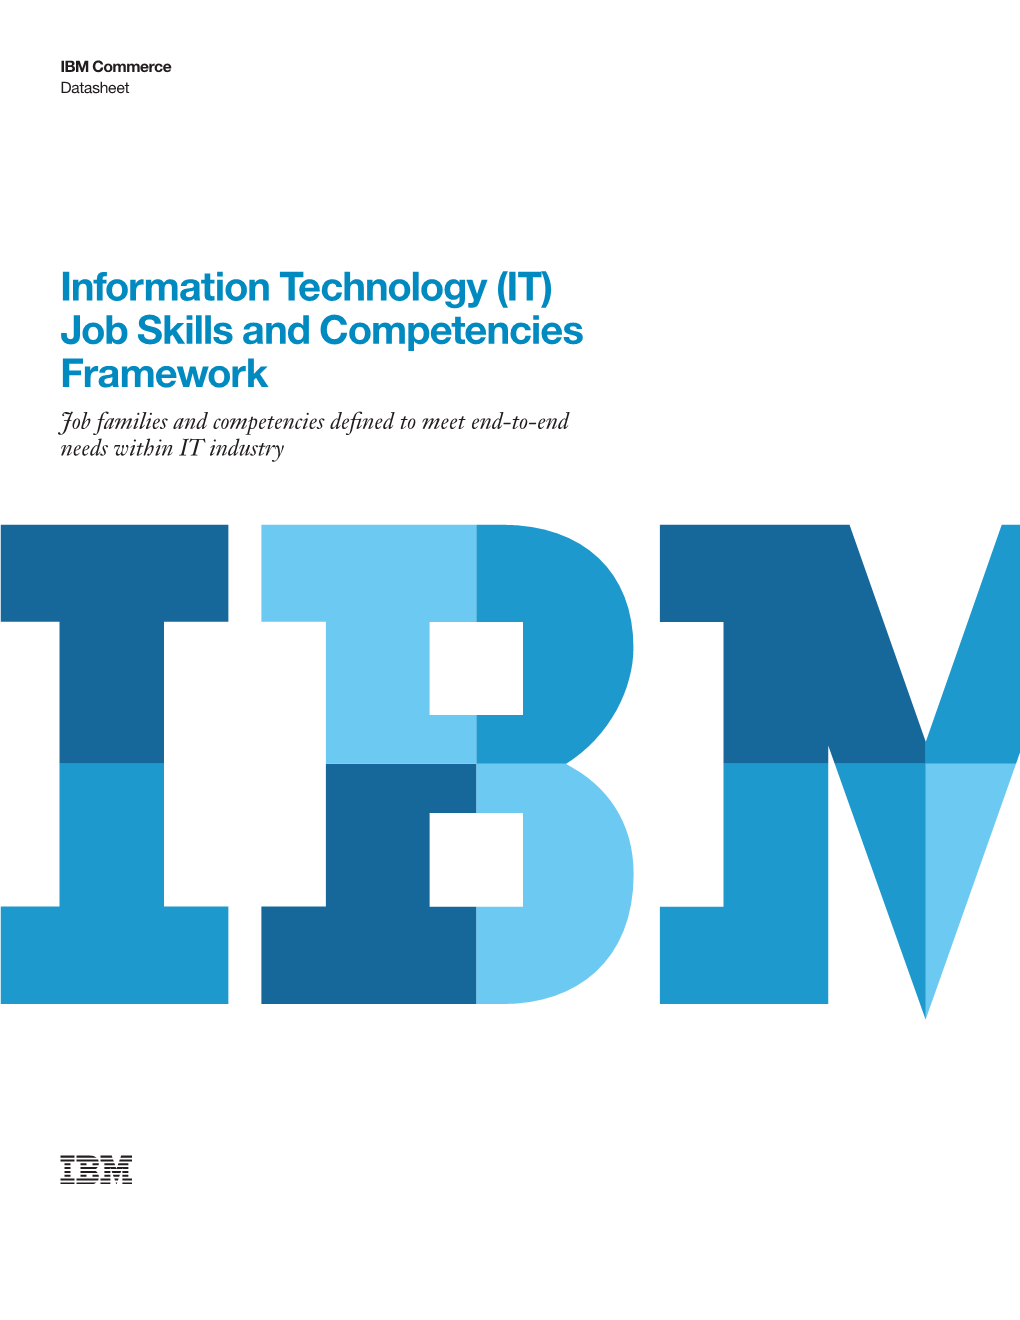 Information Technology (IT) Job Skills and Competencies Framework